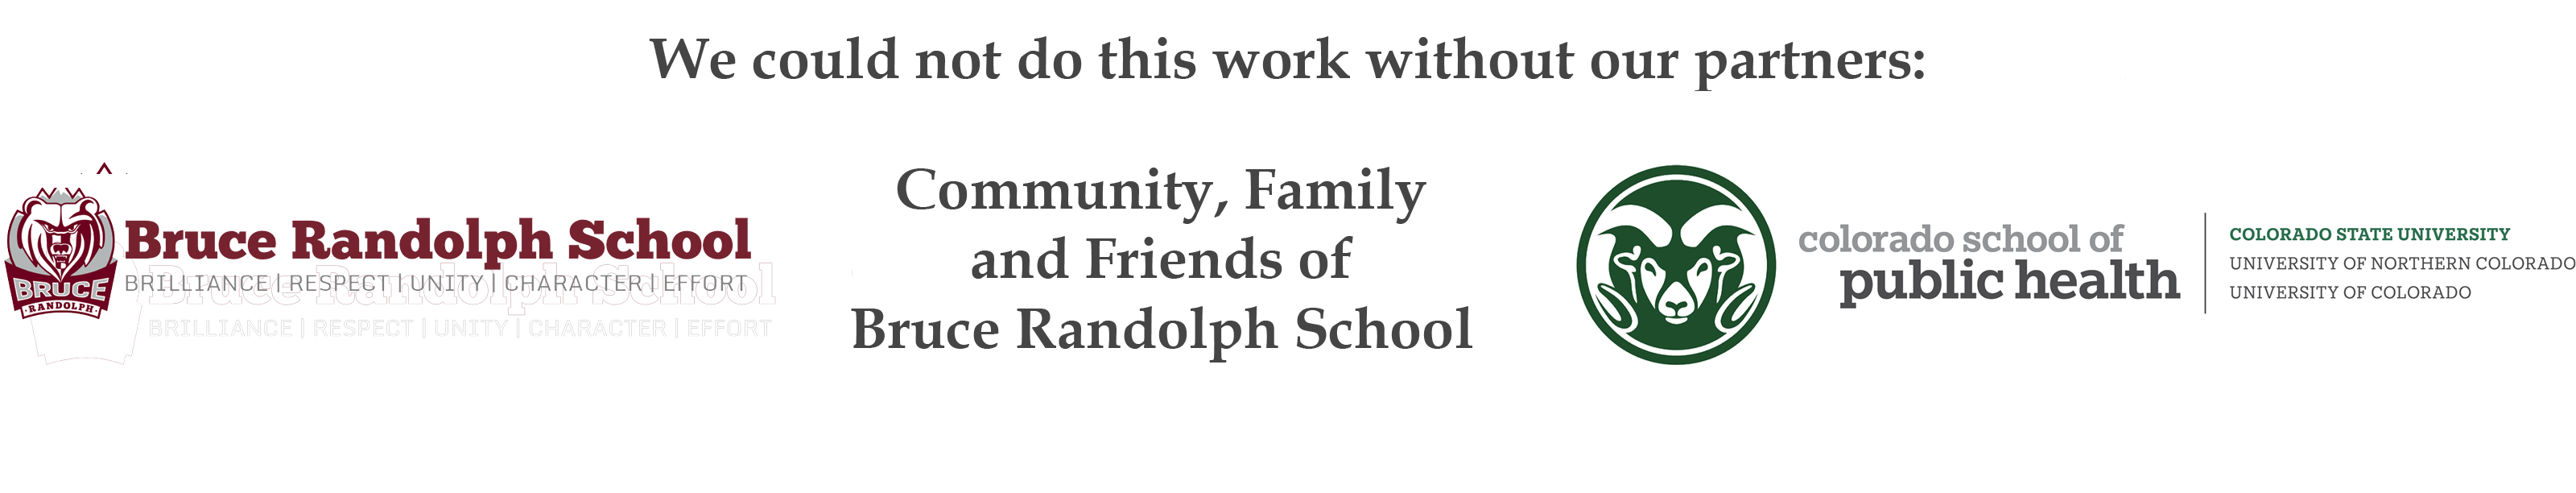 Bruce Randolph School project partners